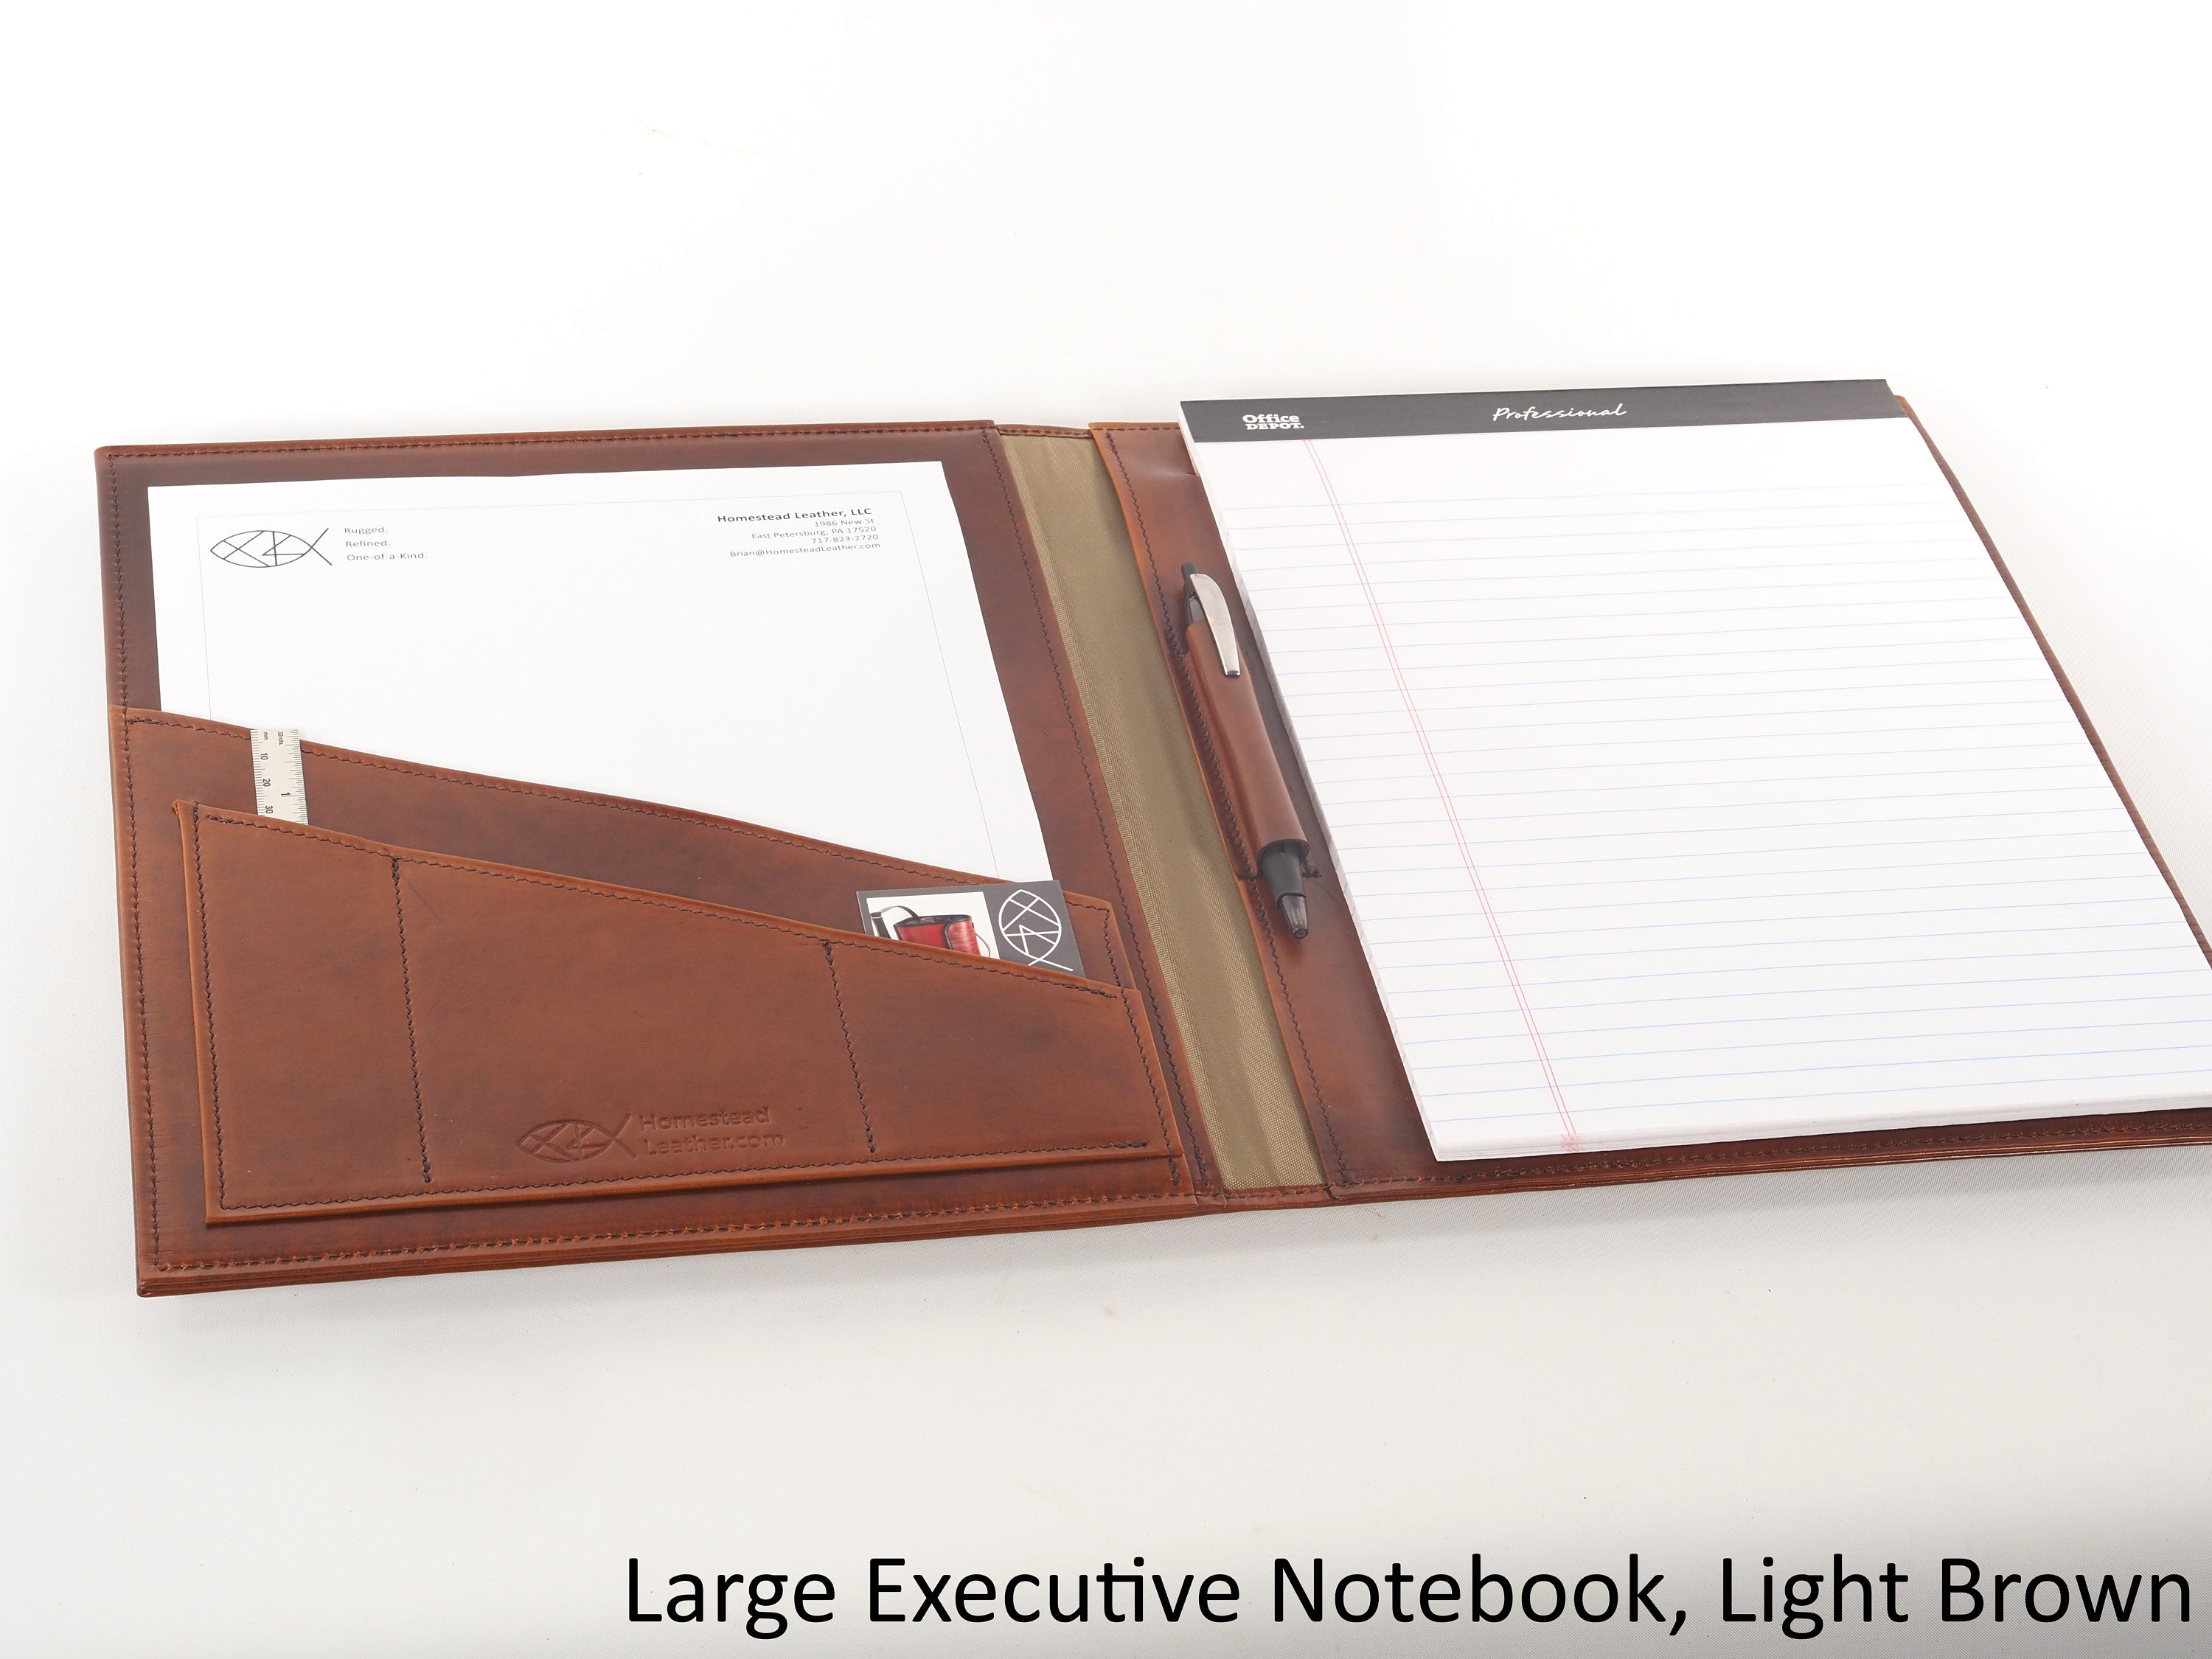 The Executive Notebook